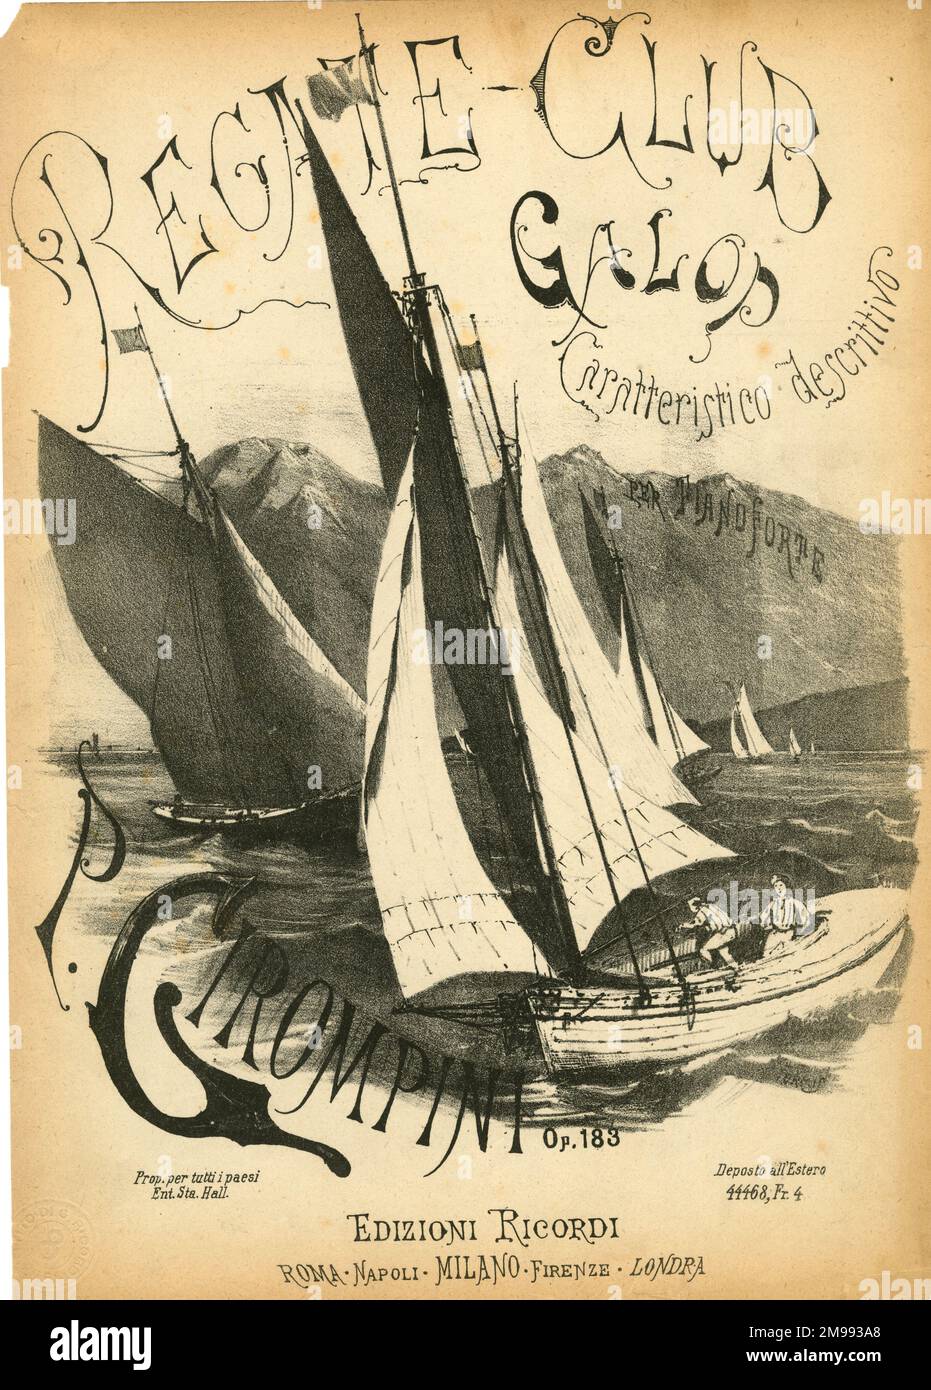 Music cover, Regate-Club Galop, Yacht Regatta, by Pietro Girompini. Stock Photo